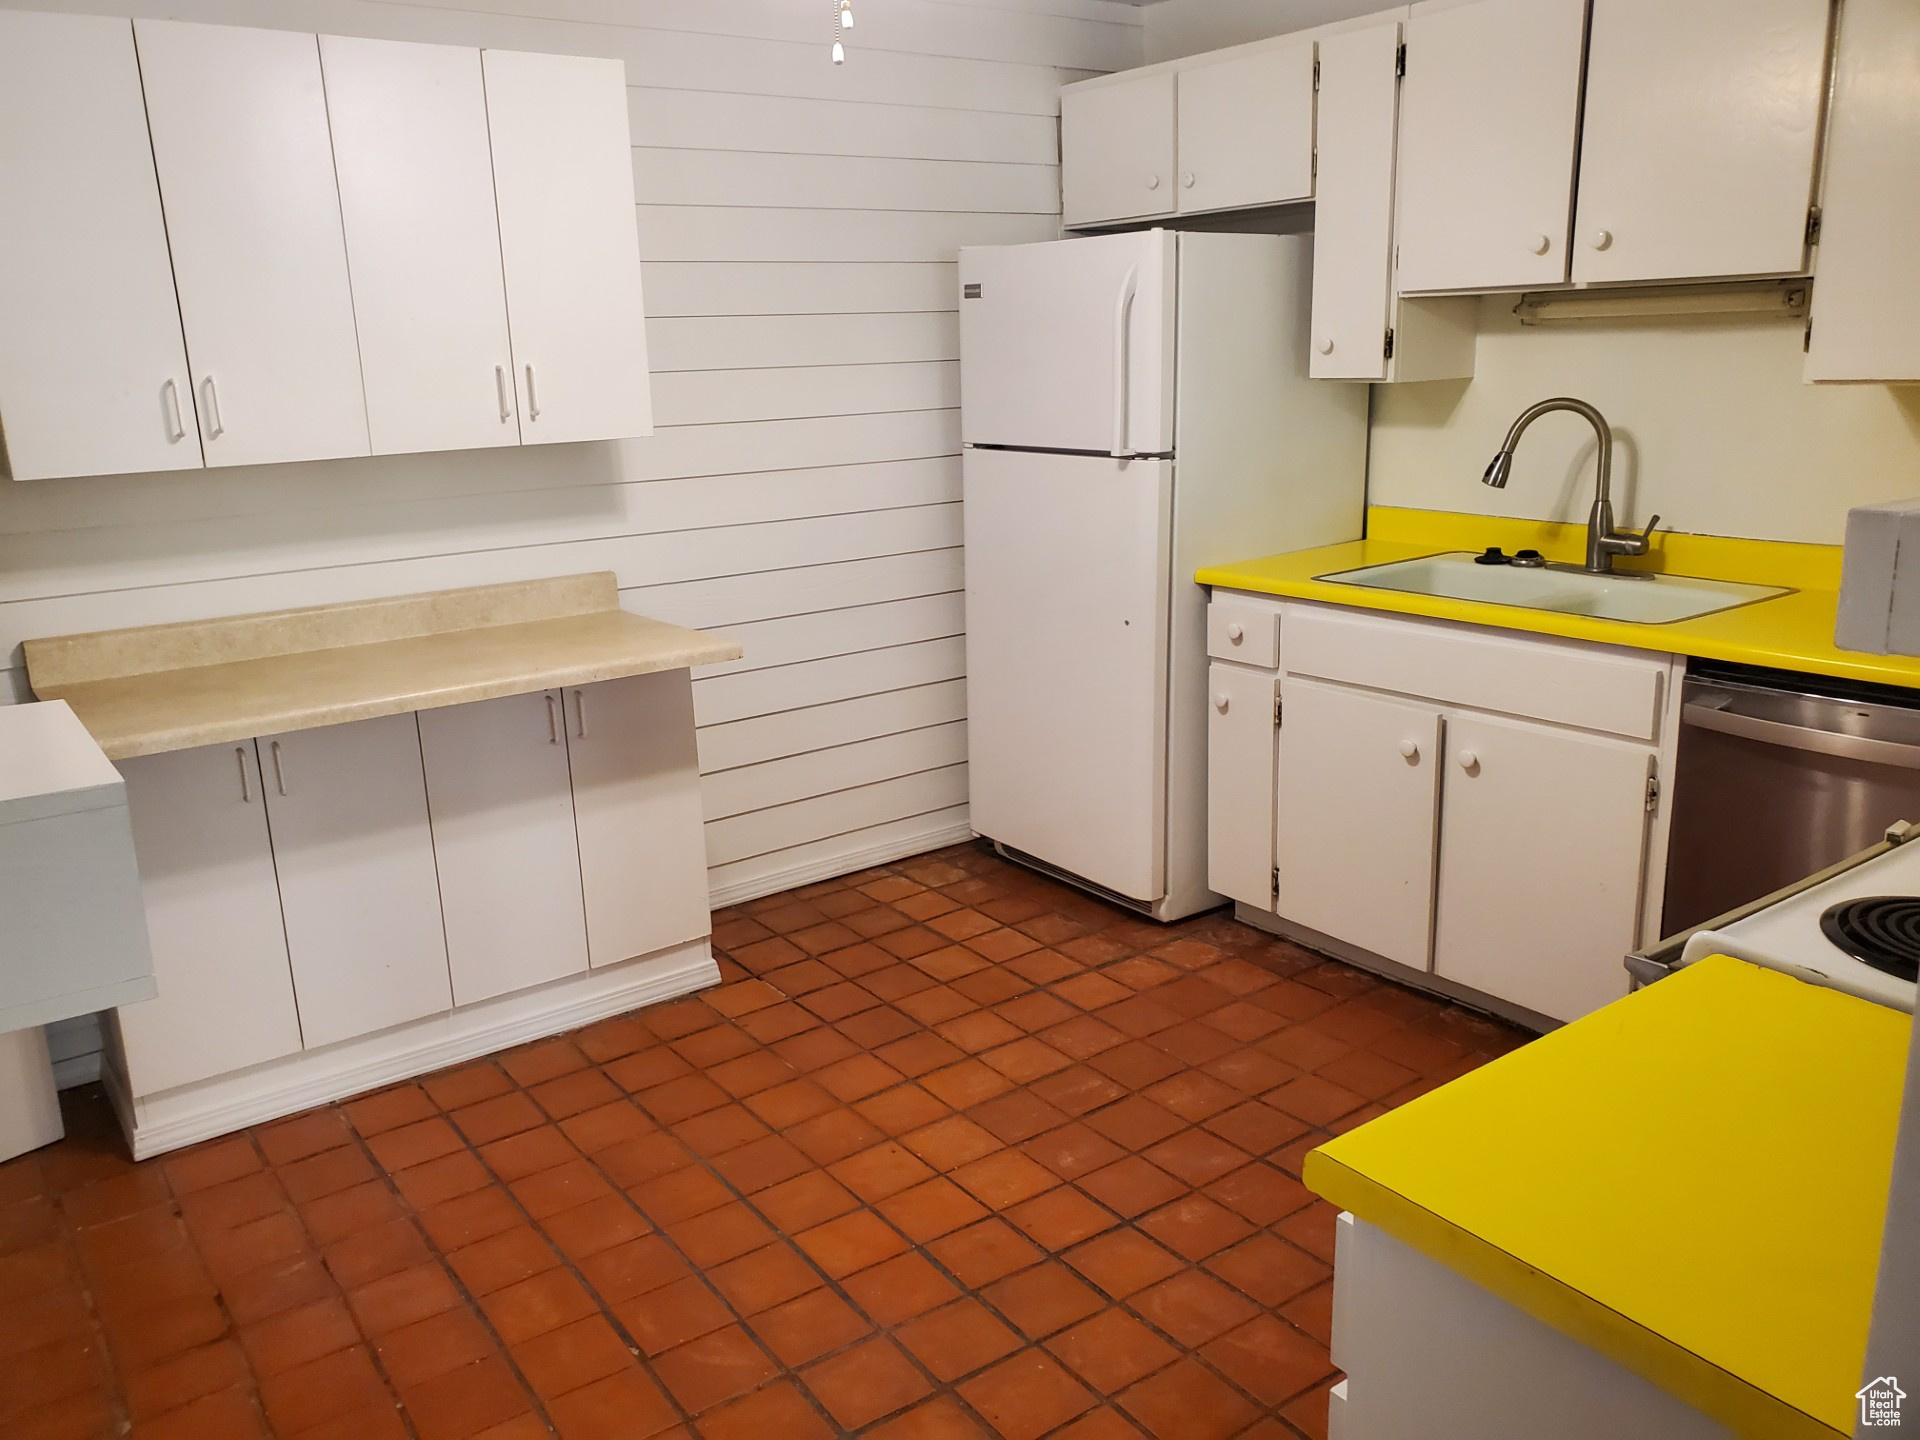 Kitchen featuring dark tile flooring, white refrigerator, dishwasher, sink, and white cabinetry